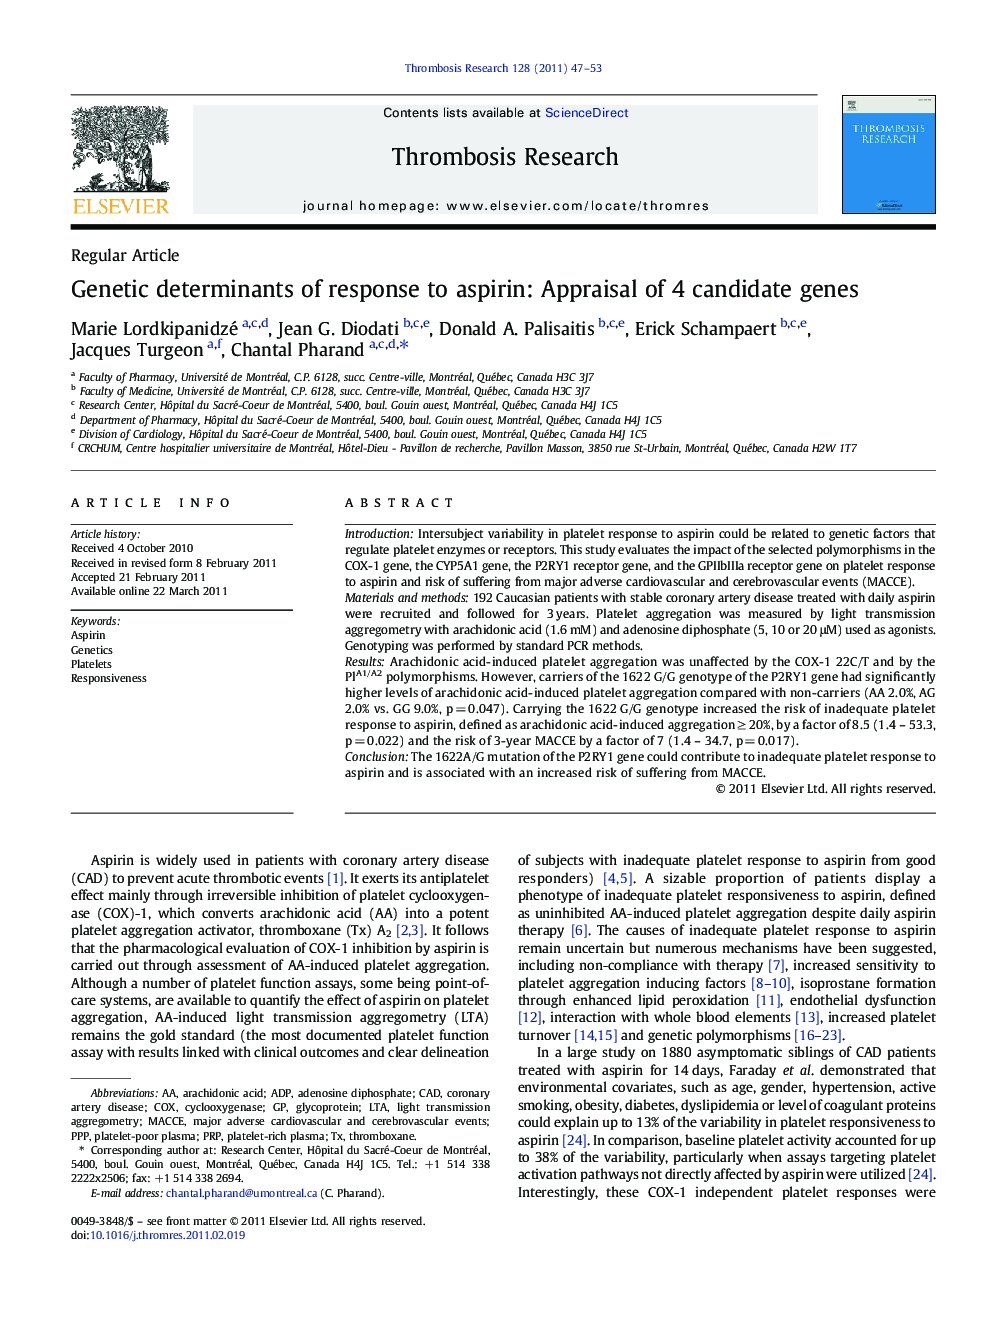 Genetic determinants of response to aspirin: Appraisal of 4 candidate genes